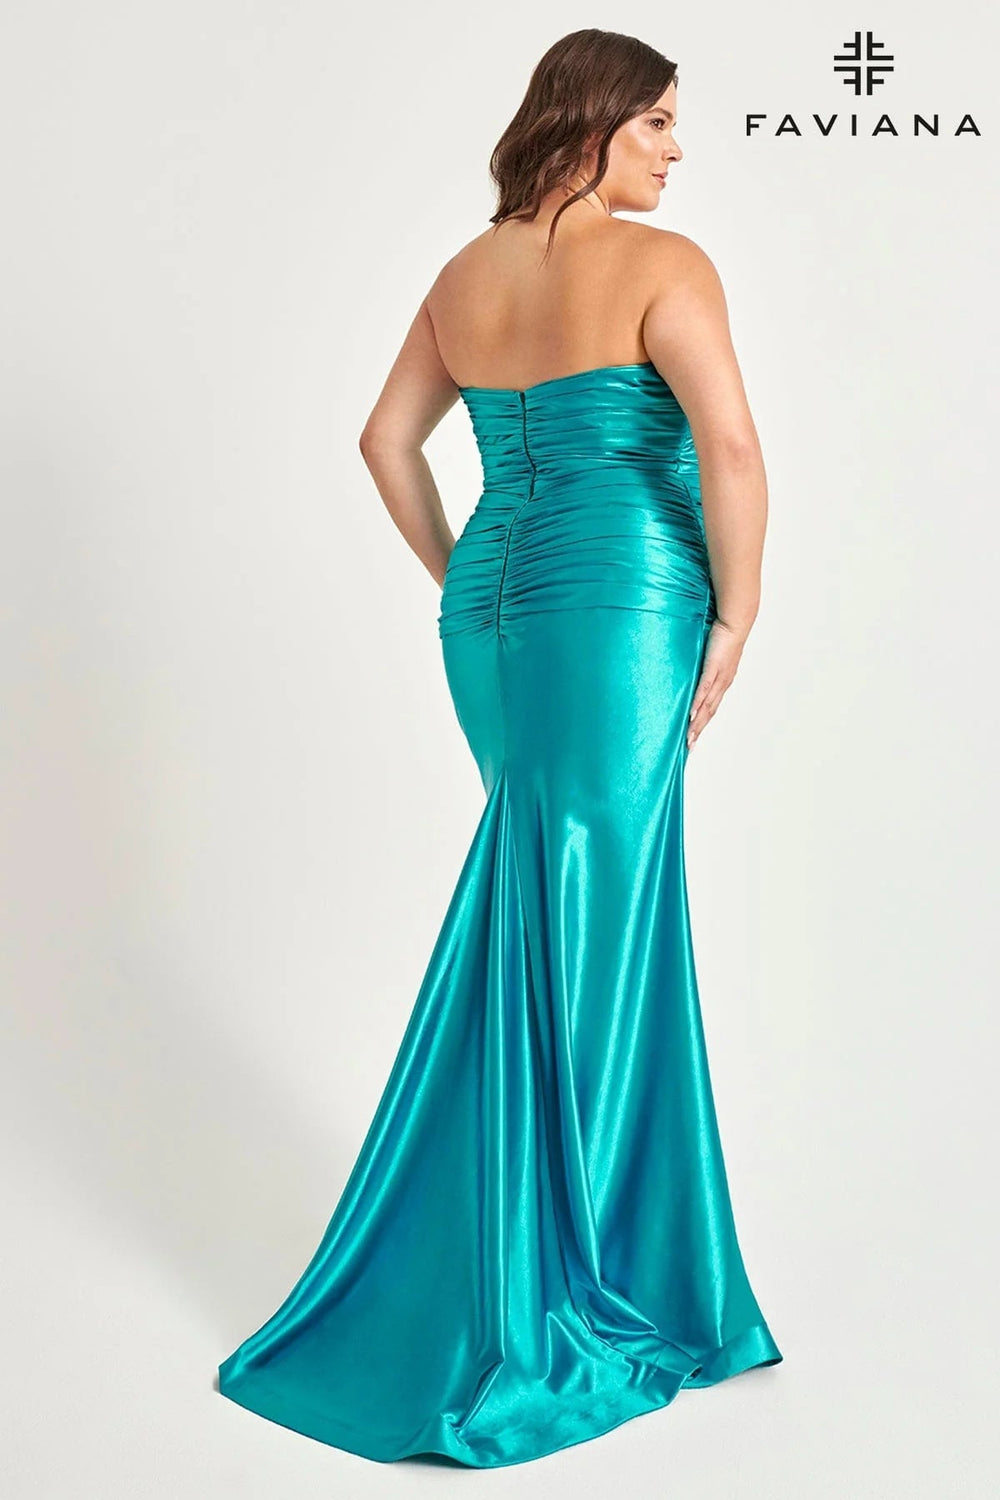 Faviana Evening Gown Plus Size FAVIANA 9545 Dress